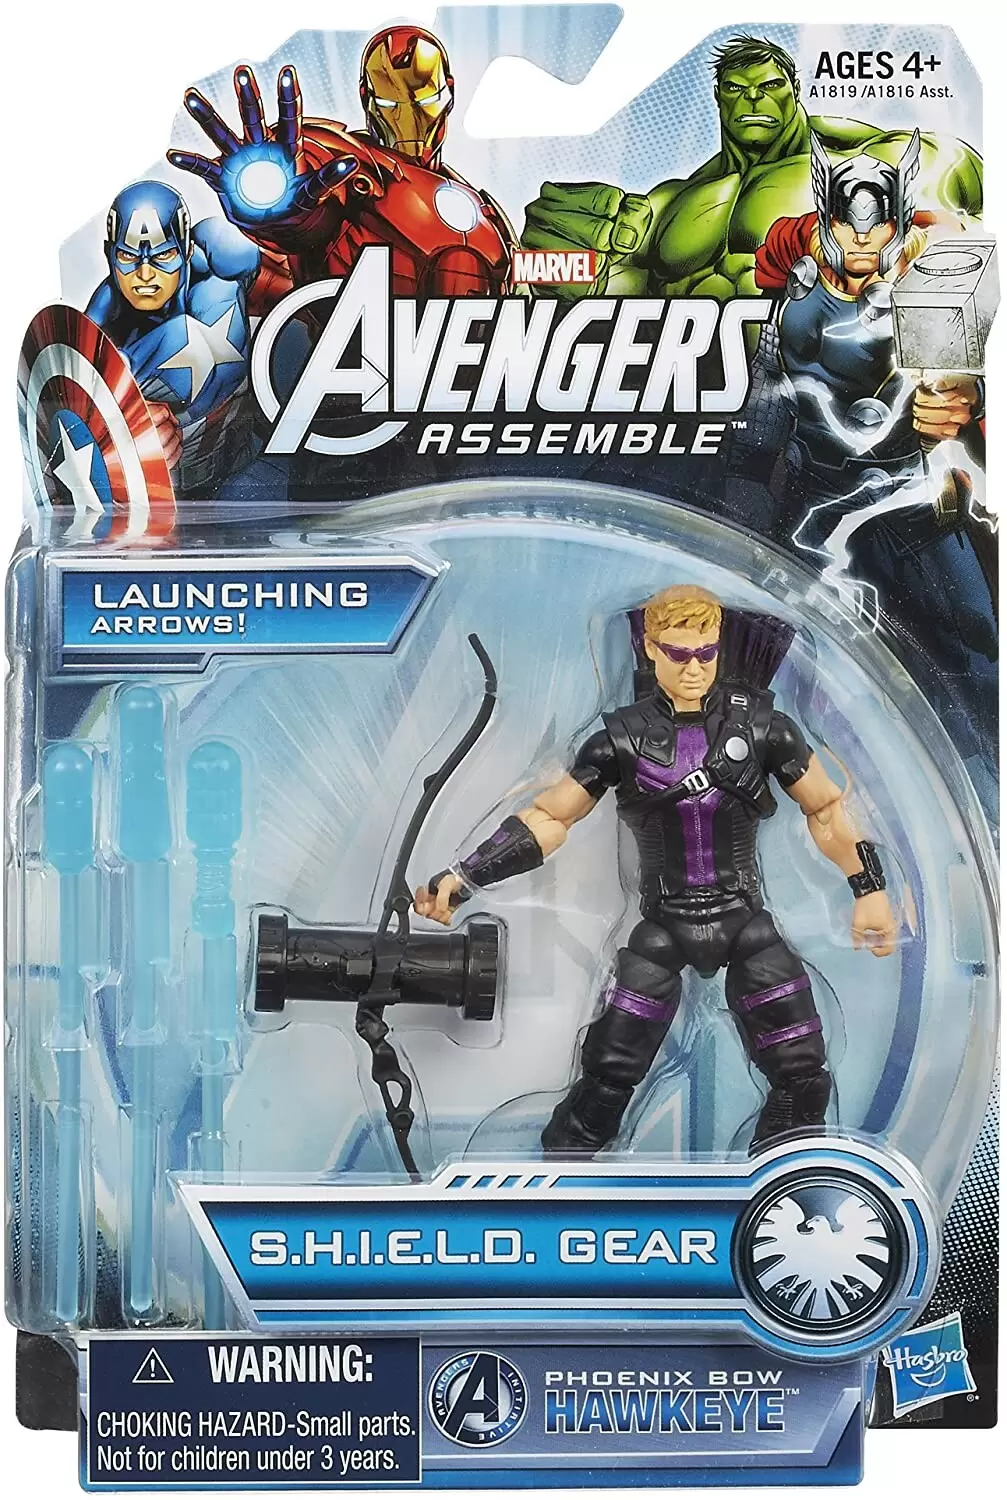 Avengers Assemble Action Figures - Phoenix Bow Hawkeye